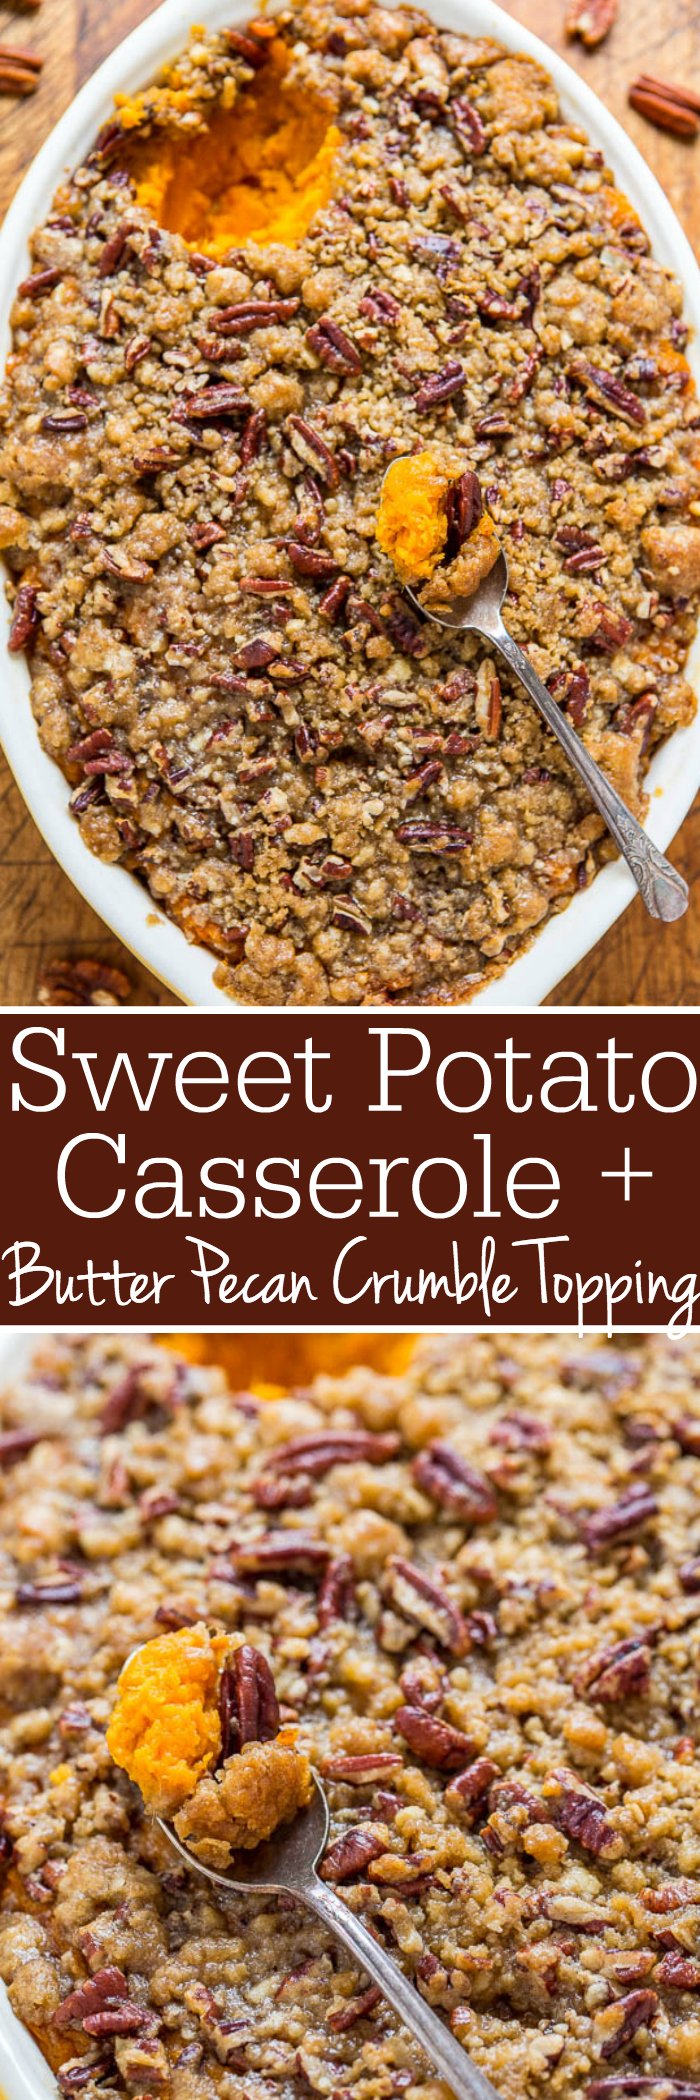 Sweet potato casserole photo collage for Pinterest 